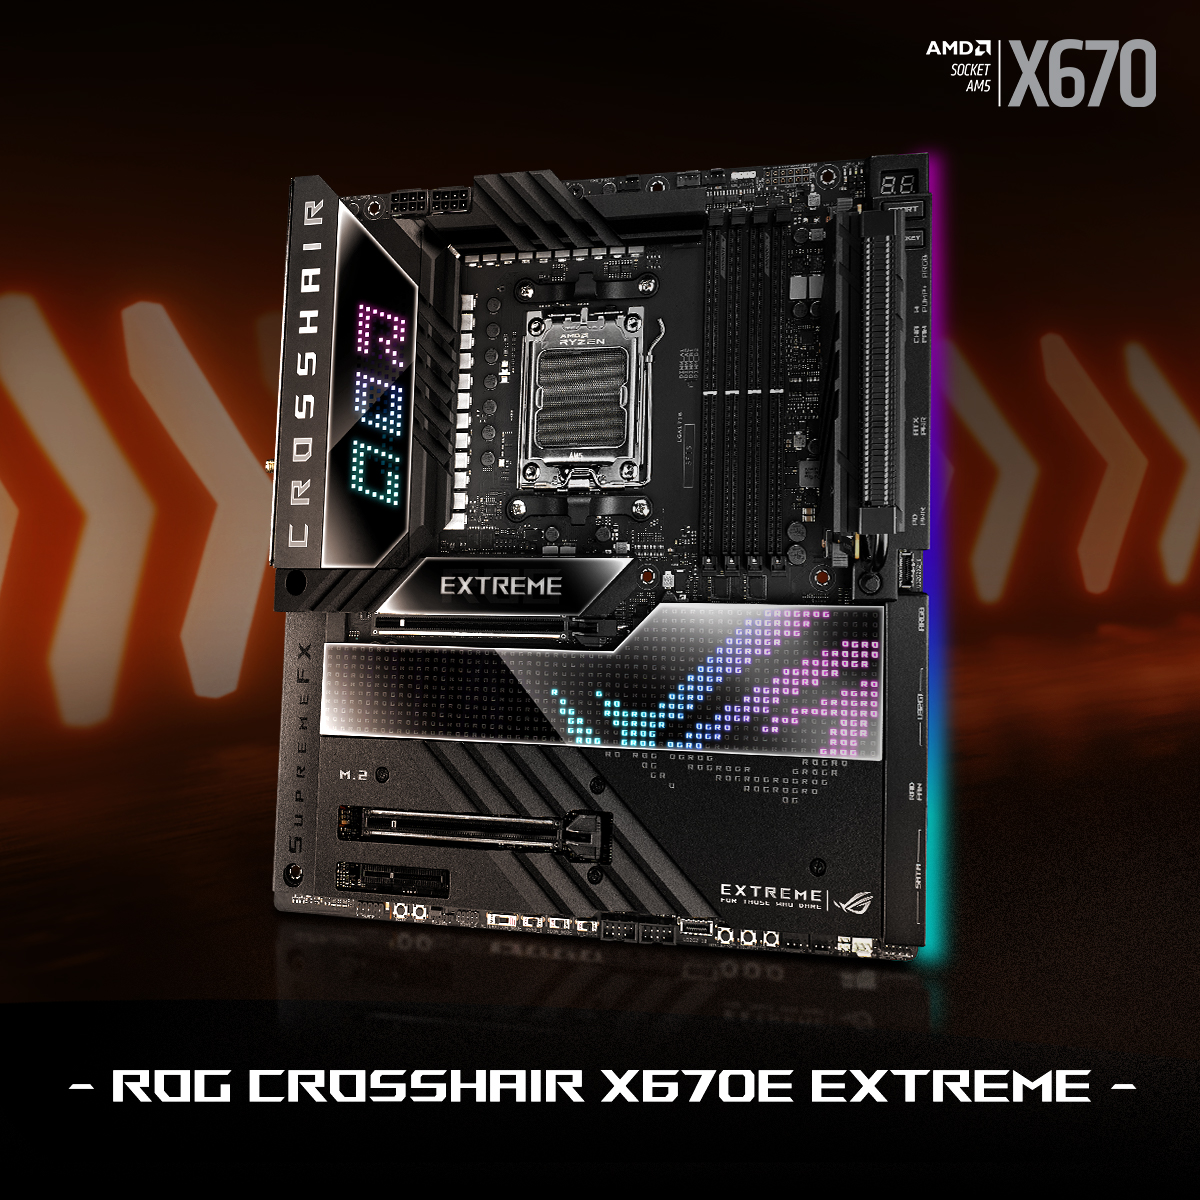 283353576 5122202377825515 4148480003188058216 n ASUS Republic of Gamers เปิดตัวเมนบอร์ด ROG Crosshair X670E Extreme มาเธอร์บอร์ดระดับเรือธงสำหรับแพลตฟอร์ม AMD AM5 รุ่นใหม่ มีสล็อต PCI Express 5.0 แบบคู่, การจ่ายพลังงานที่แข็งแกร่ง, รองรับ DDR5, USB4, ASUS Q Design และอื่น ๆ